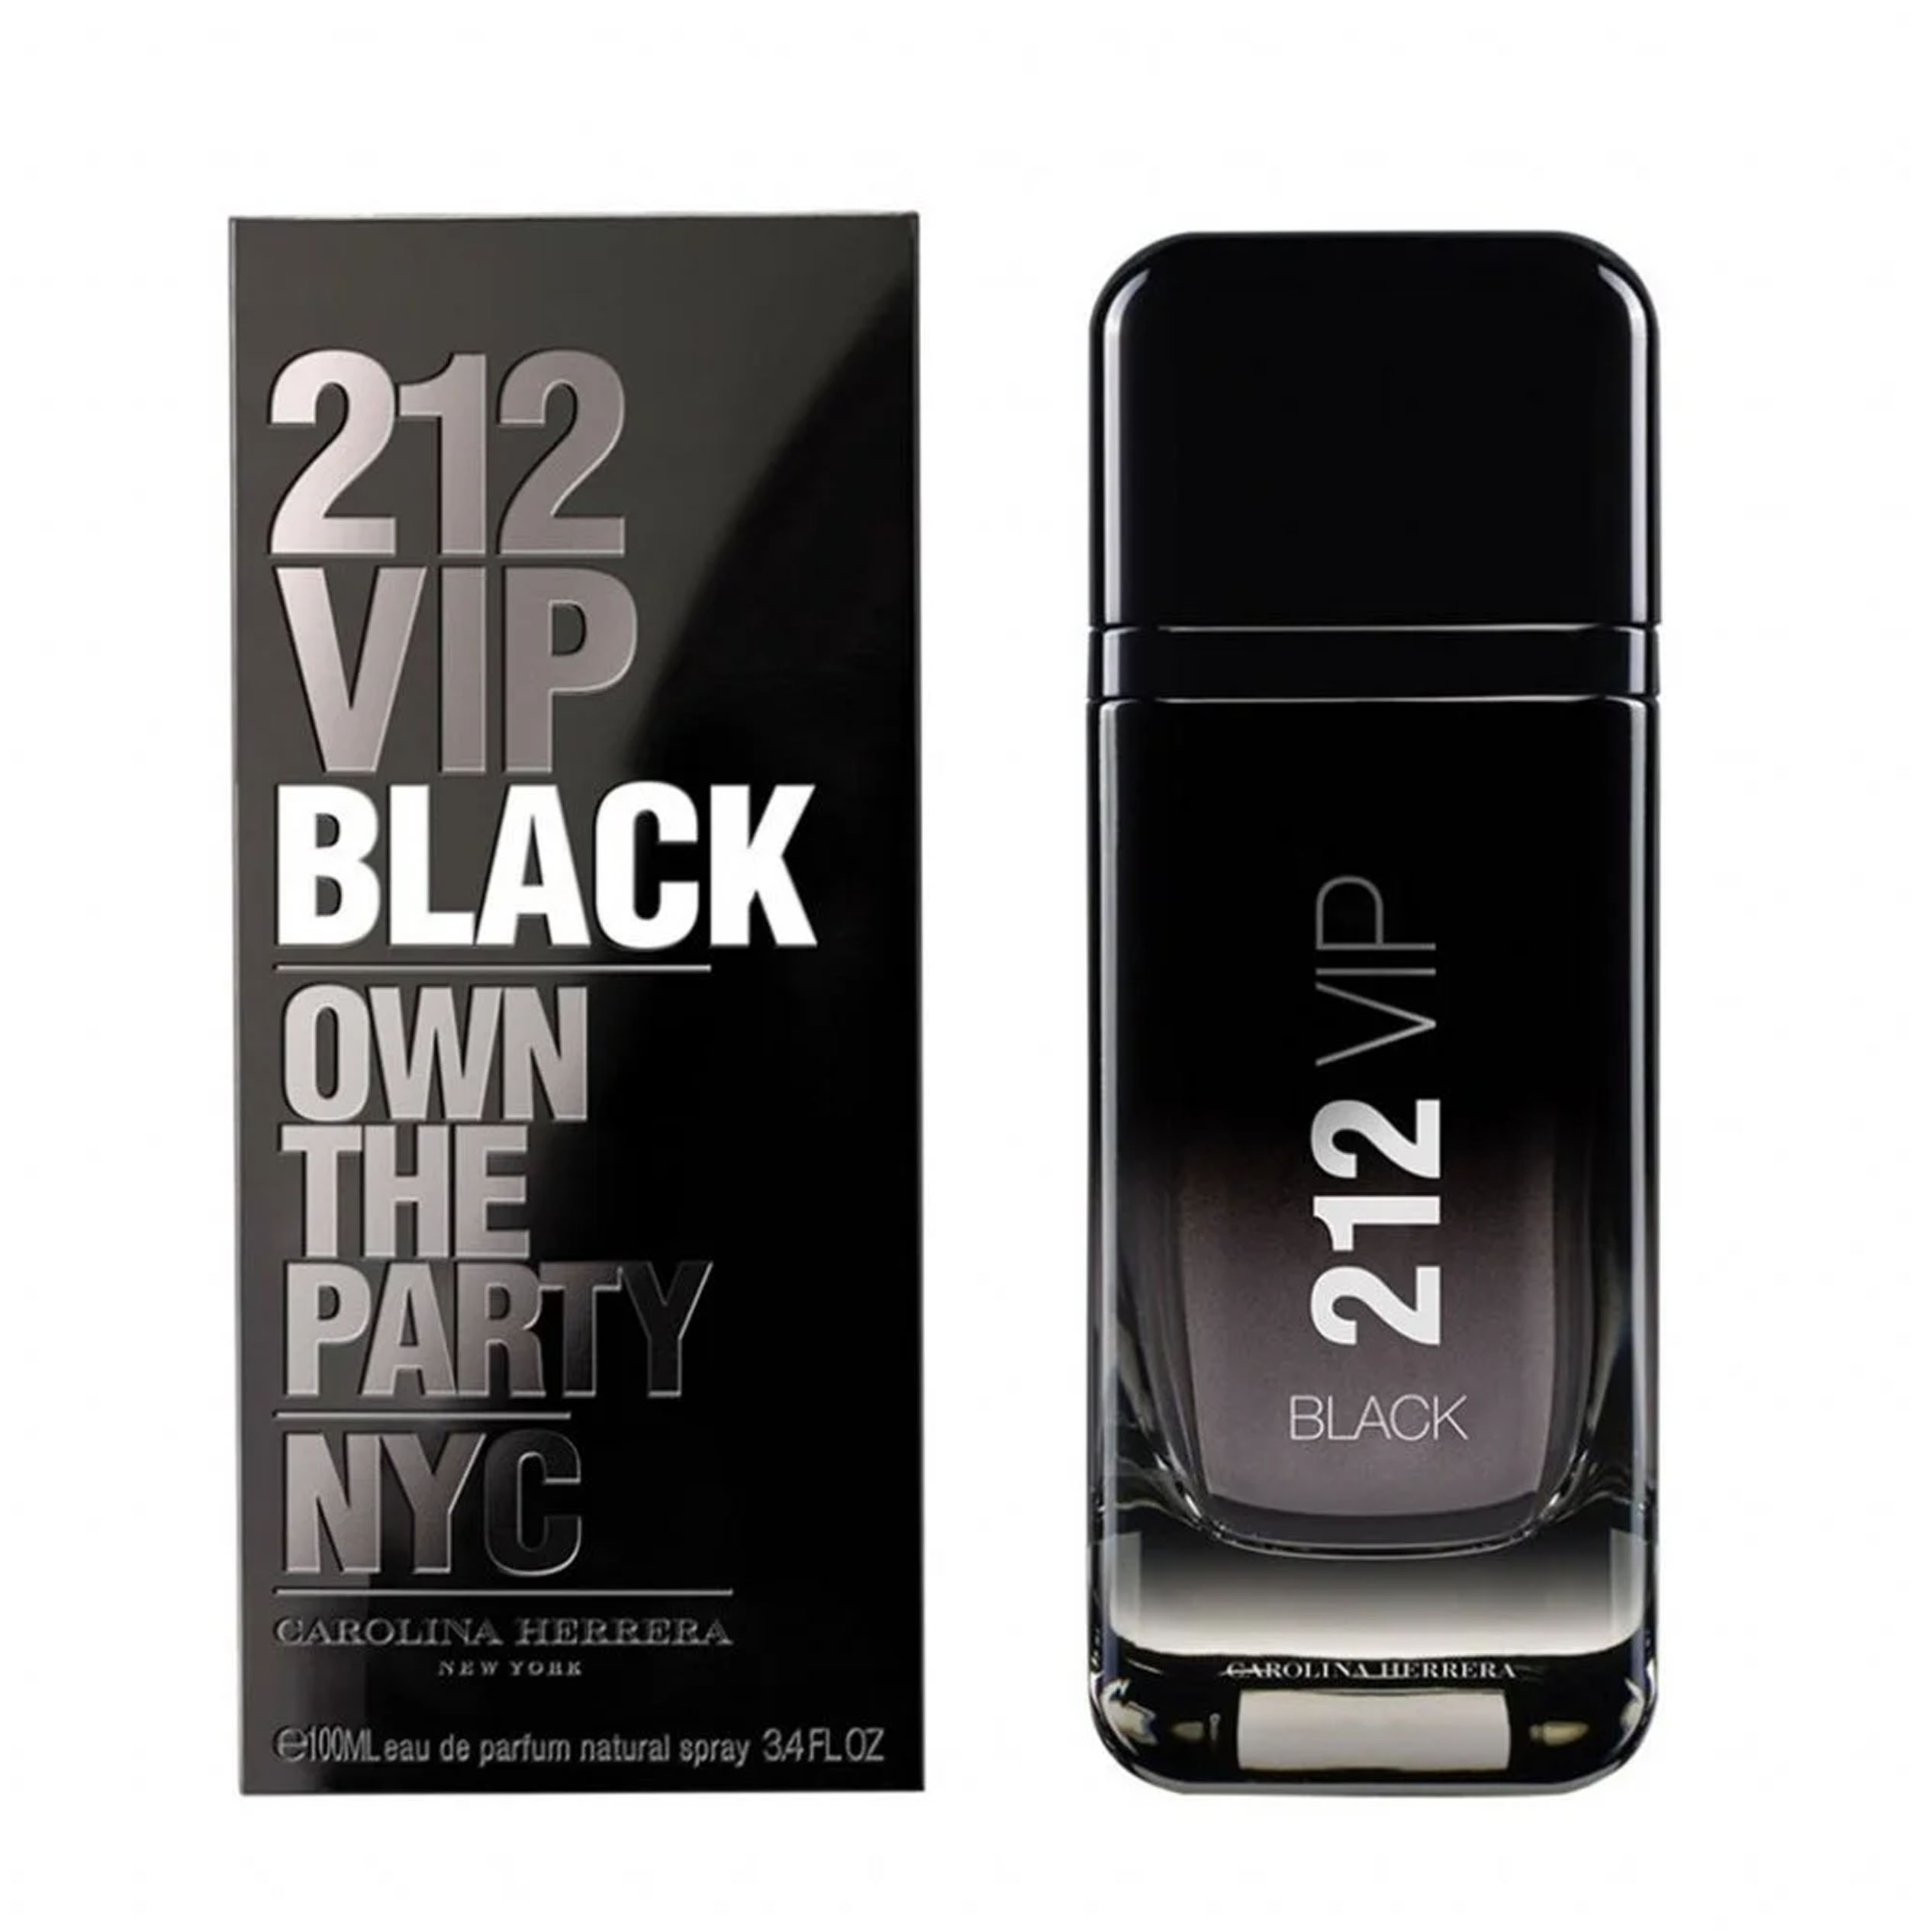 Perfume 212 Vip Black Carolina Herrera    (Replica Con Fragancia Importada)- Hombre